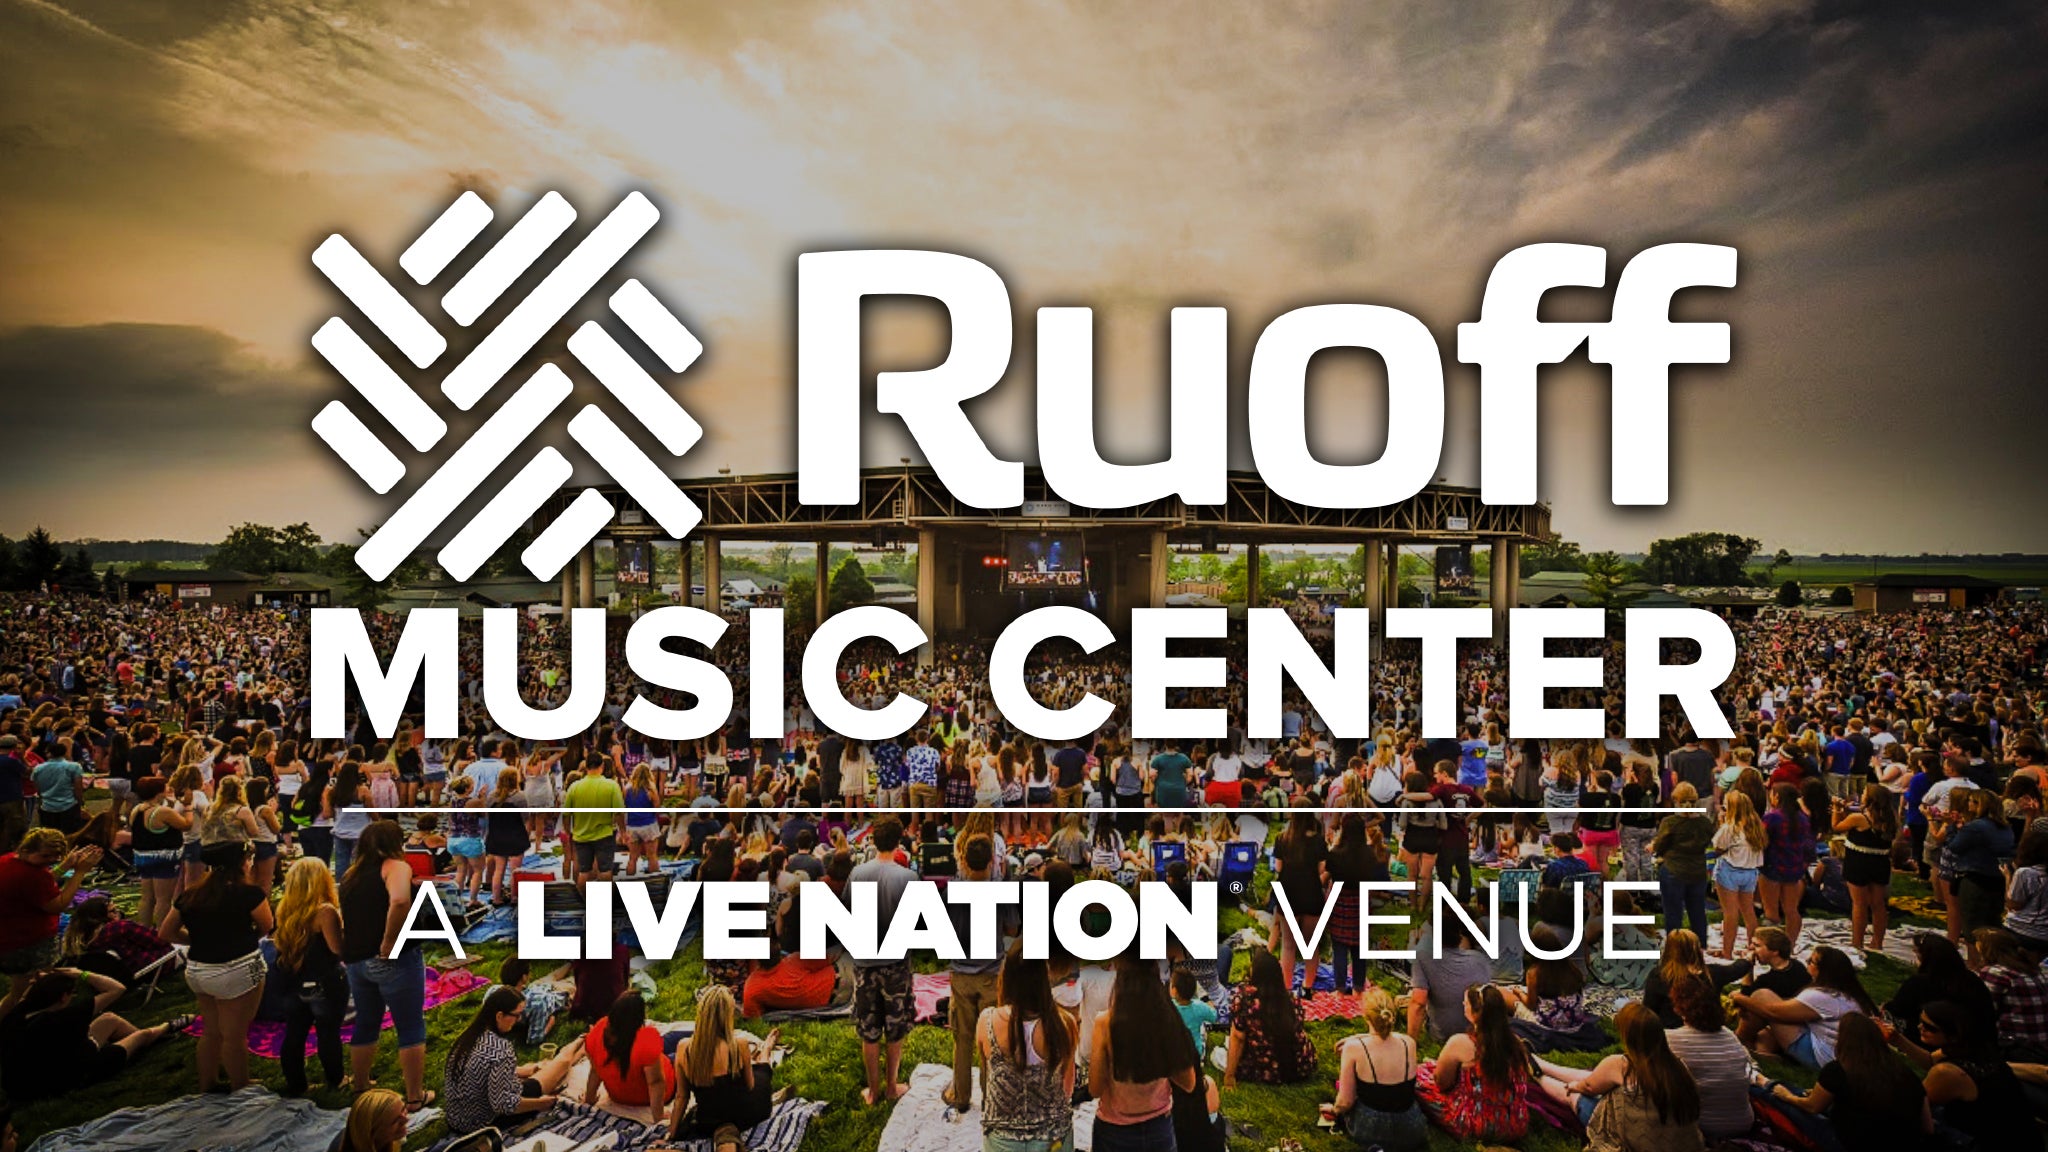 Ruoff Music Center 2020 show schedule & venue information Live Nation